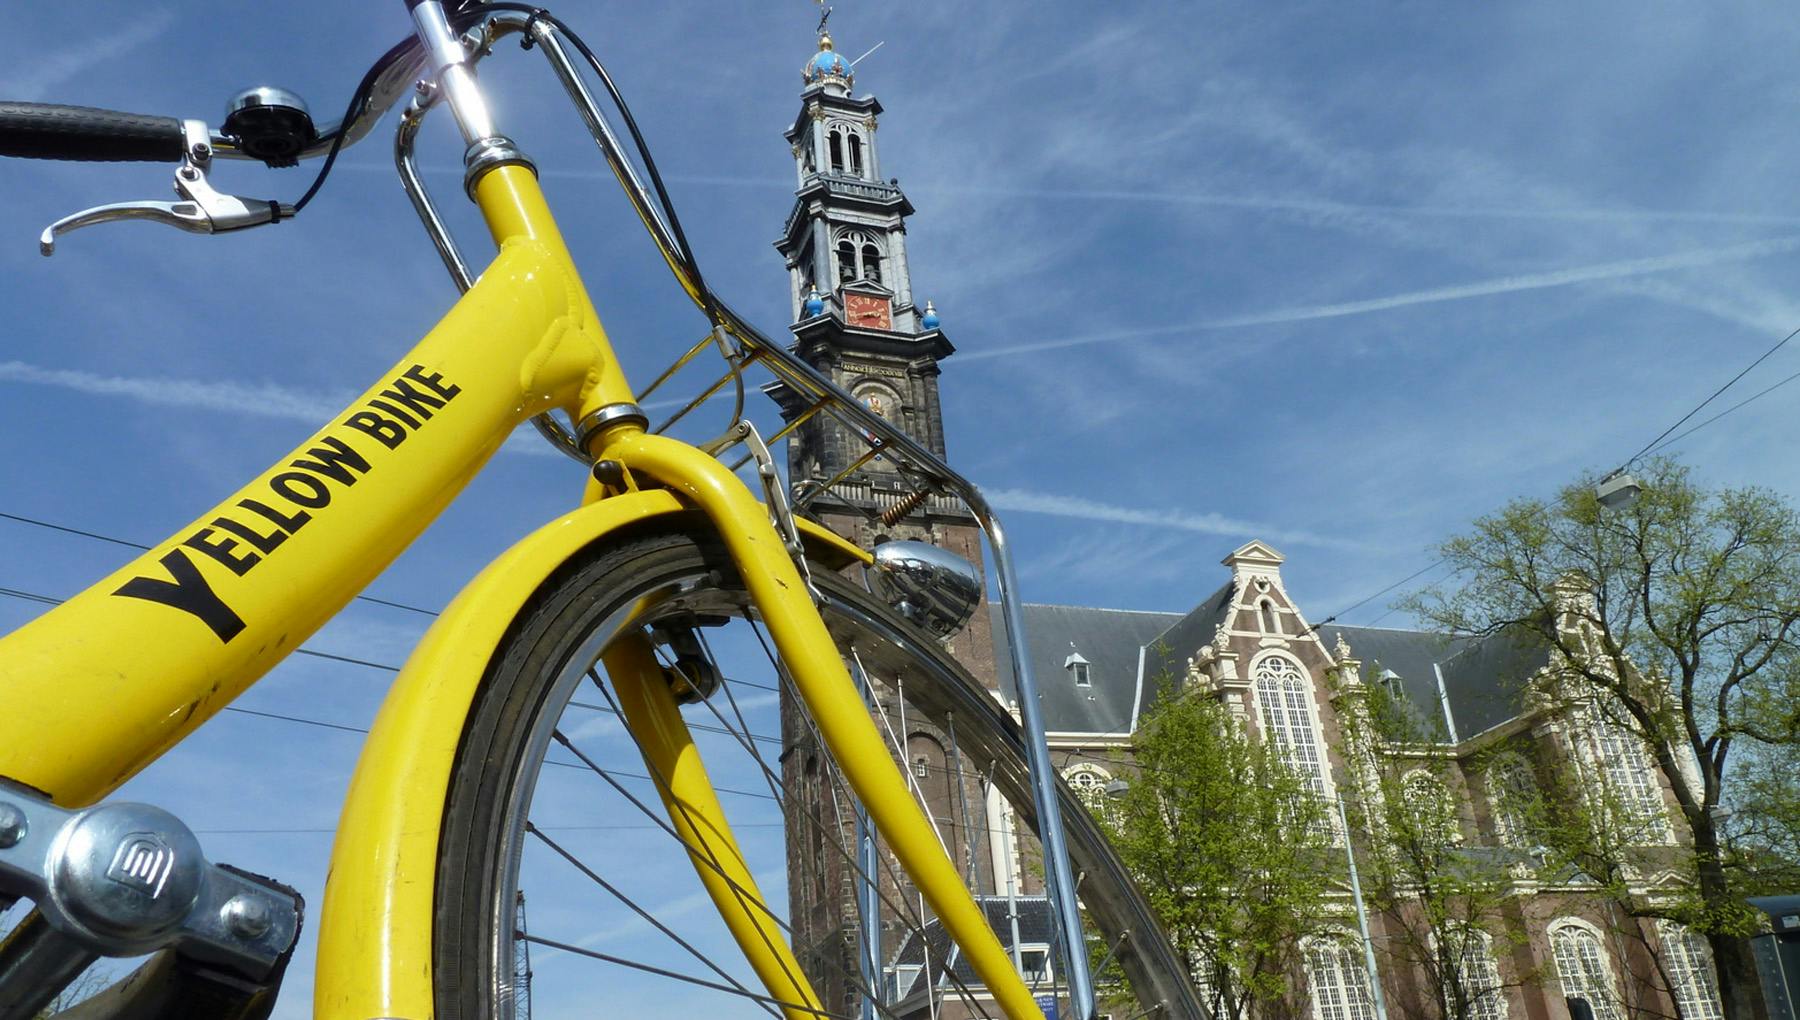 Jordaan Tour by bike